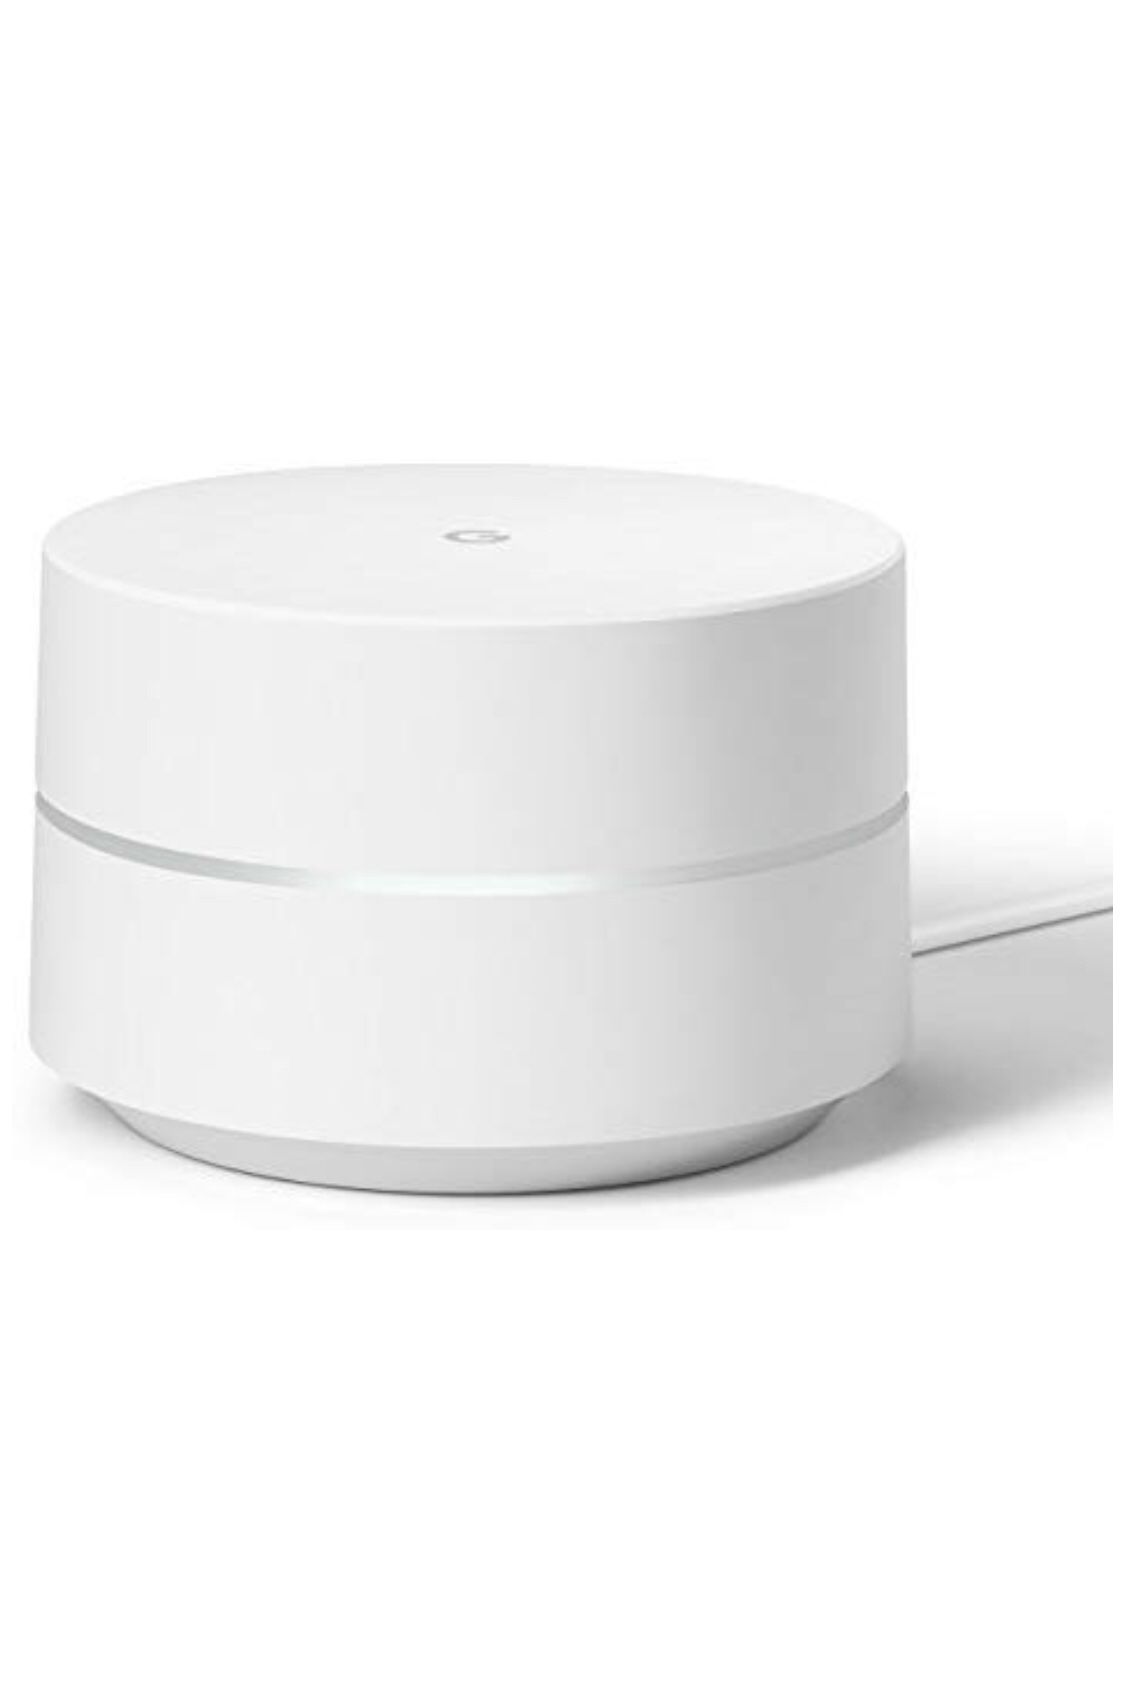 NEW Google WiFi - Mesh WiFi Router